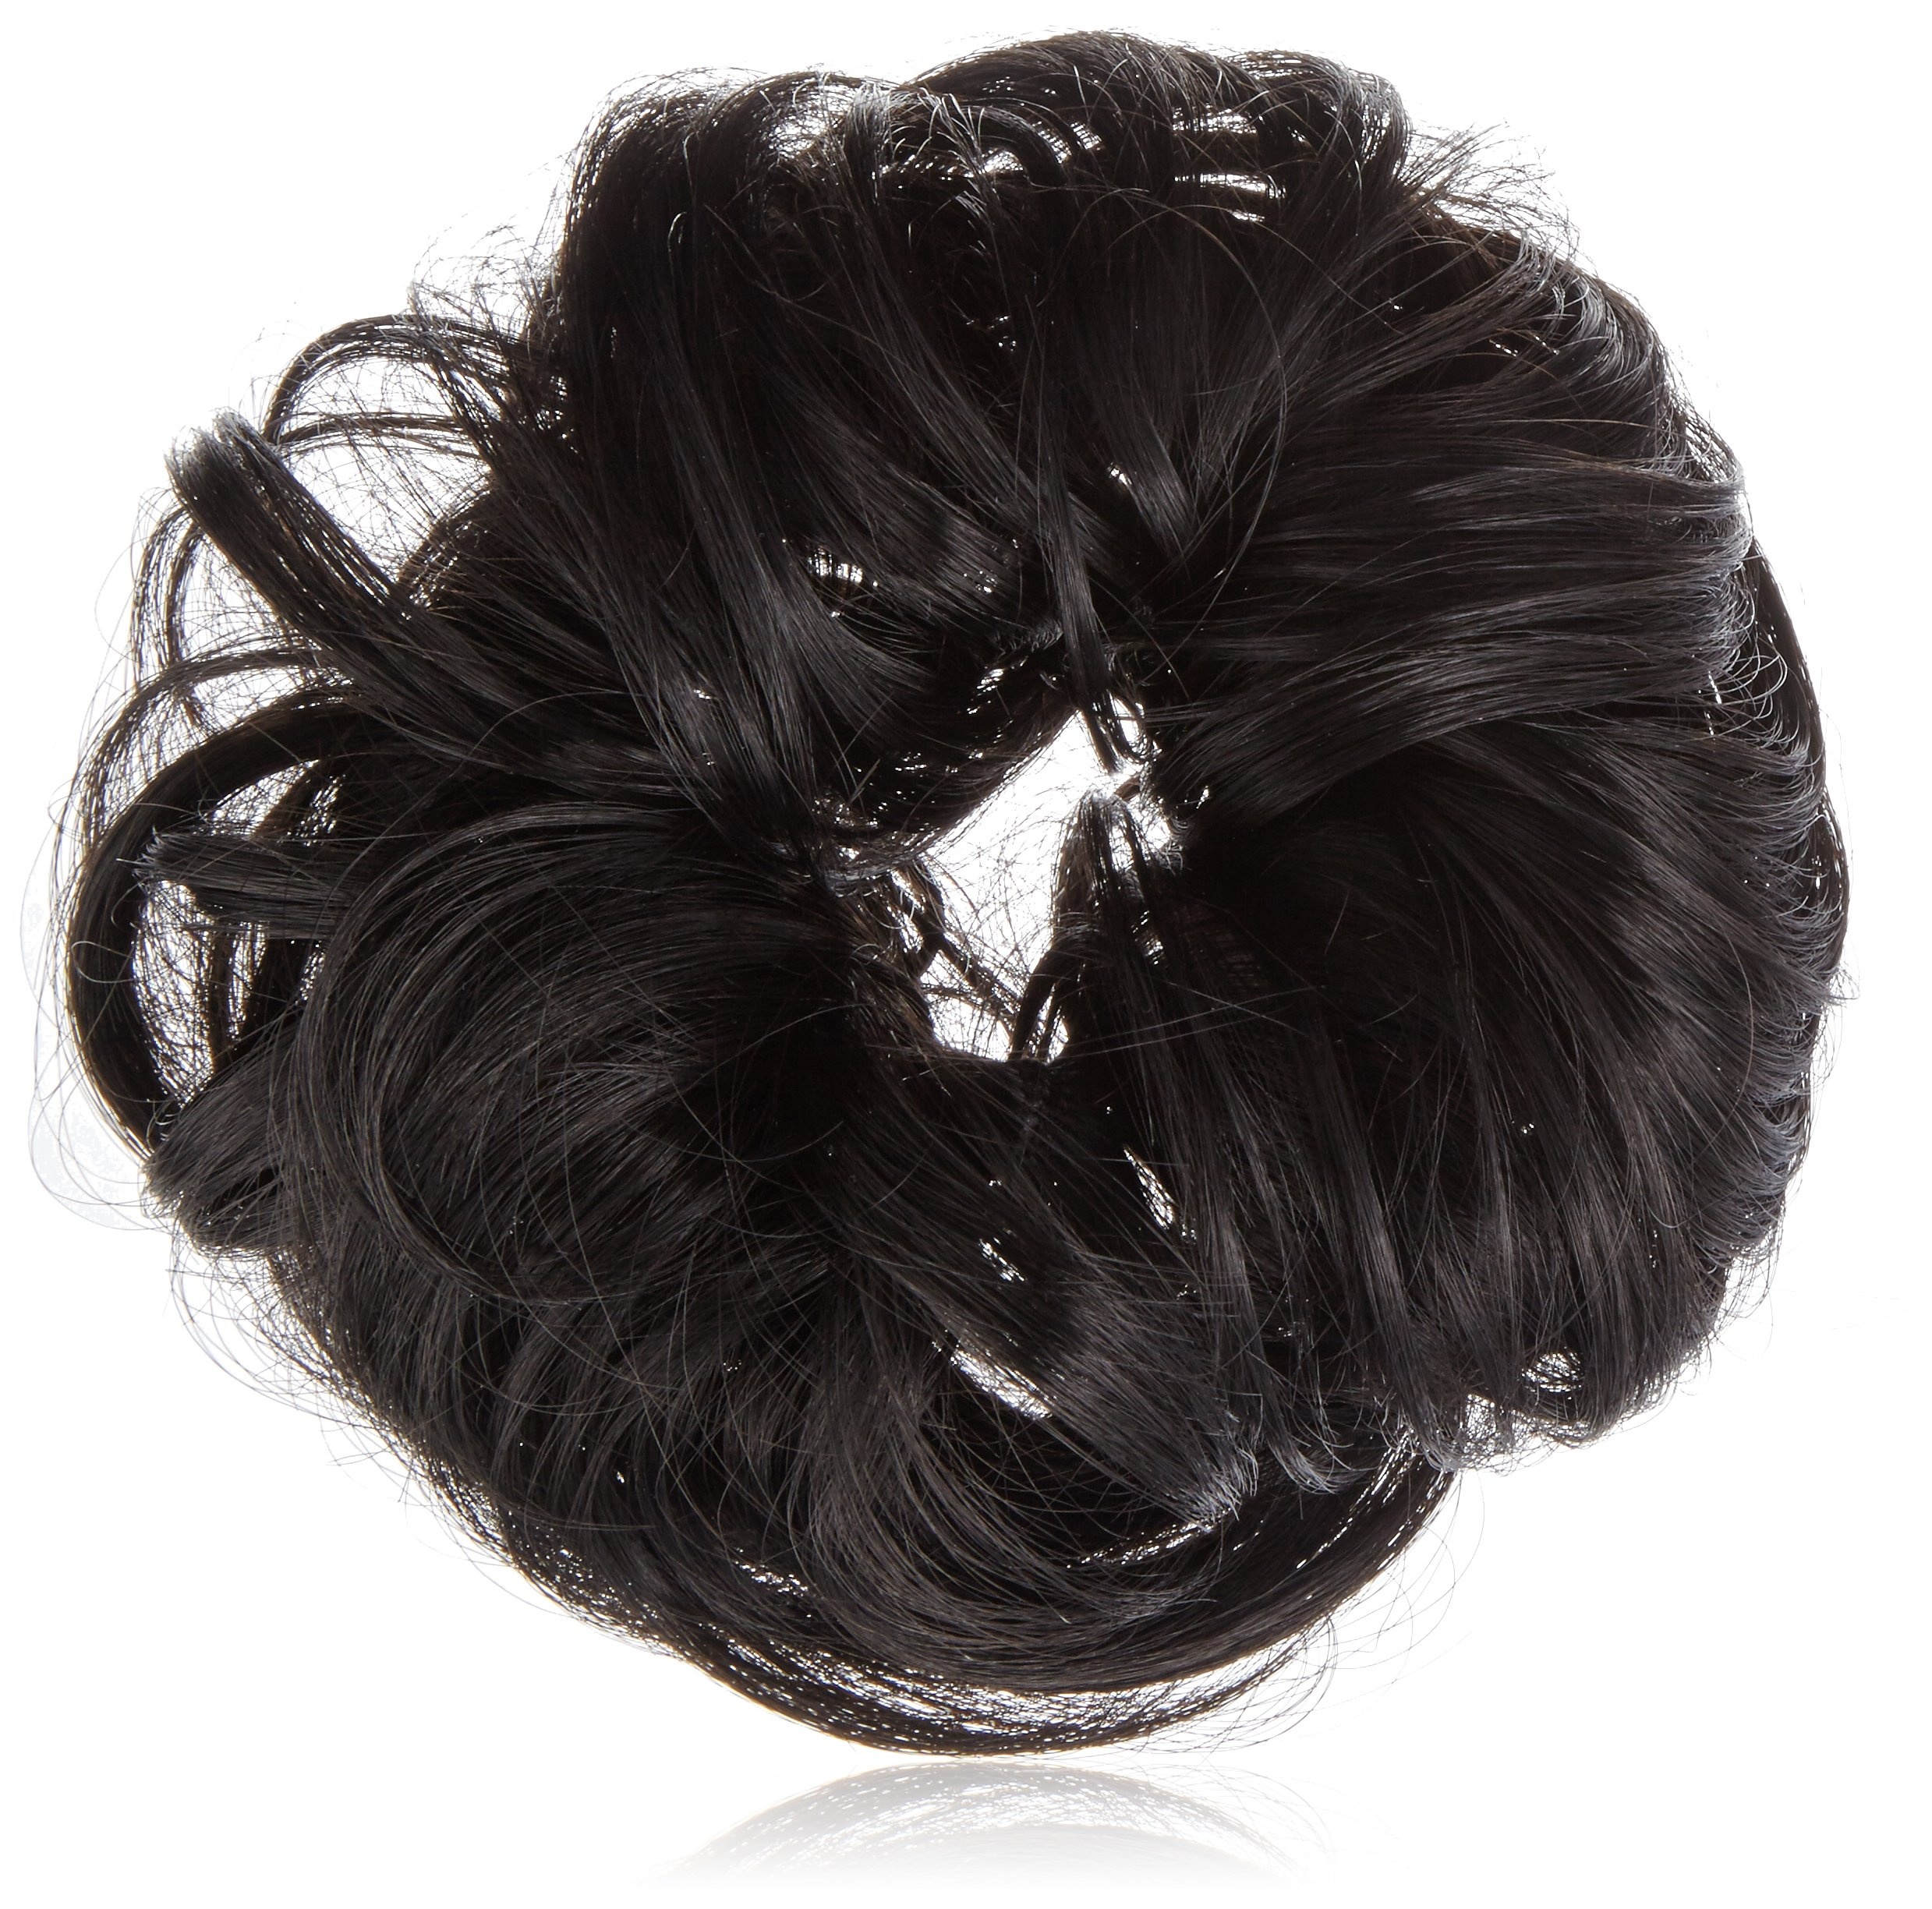 Solida Bel Hair Fashionring Kerstin Kunsthaar, schwarz, 1 Stück